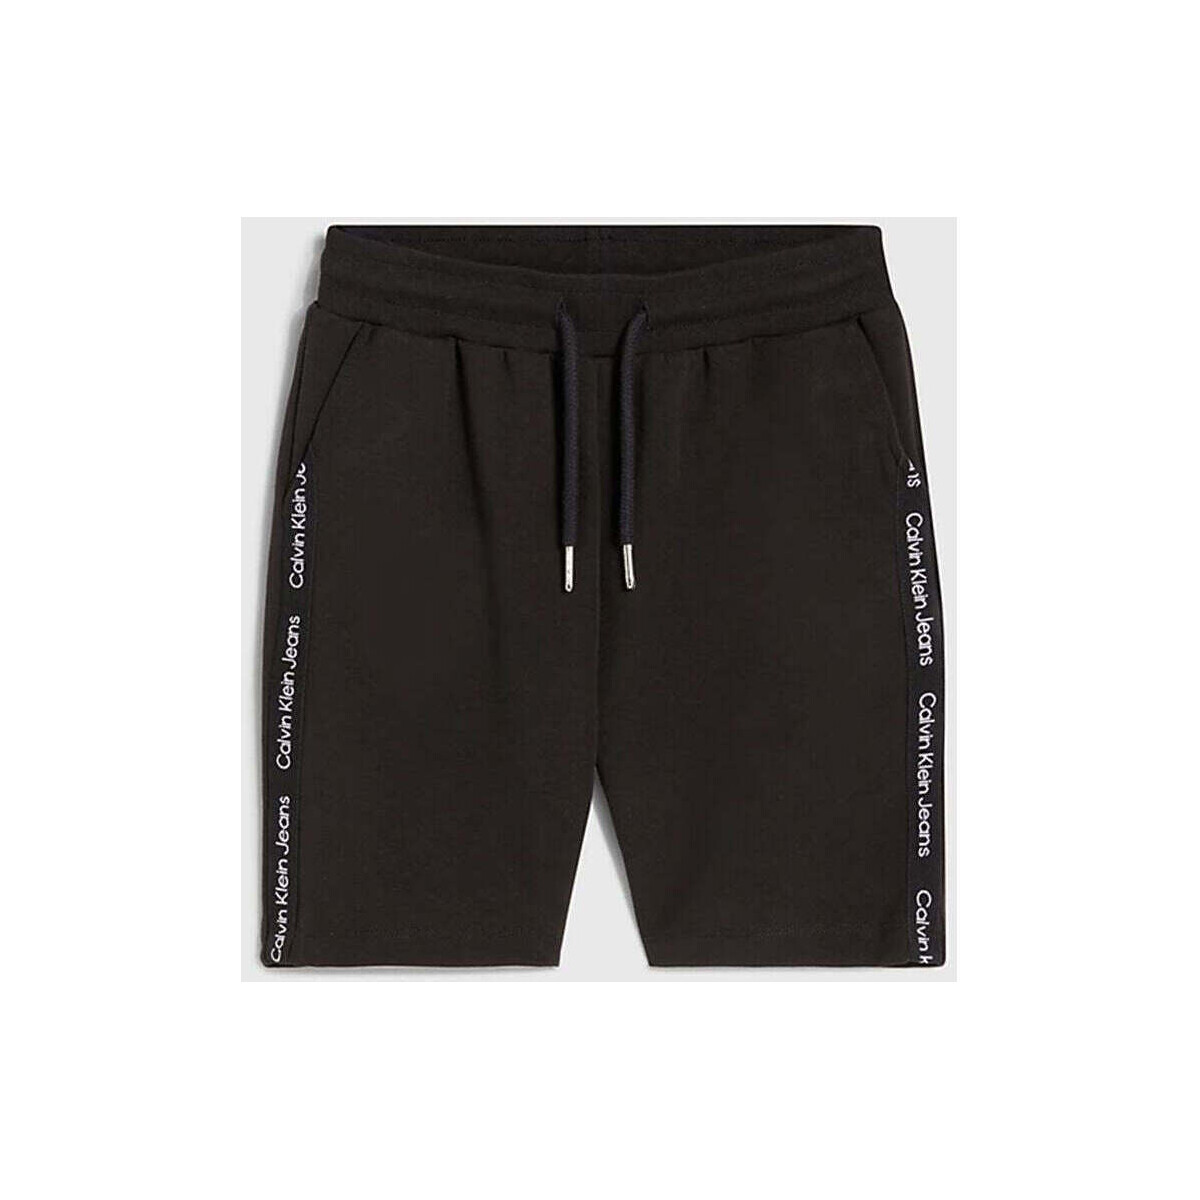 Vêtements Garçon Shorts / Bermudas Calvin Klein Jeans  Noir